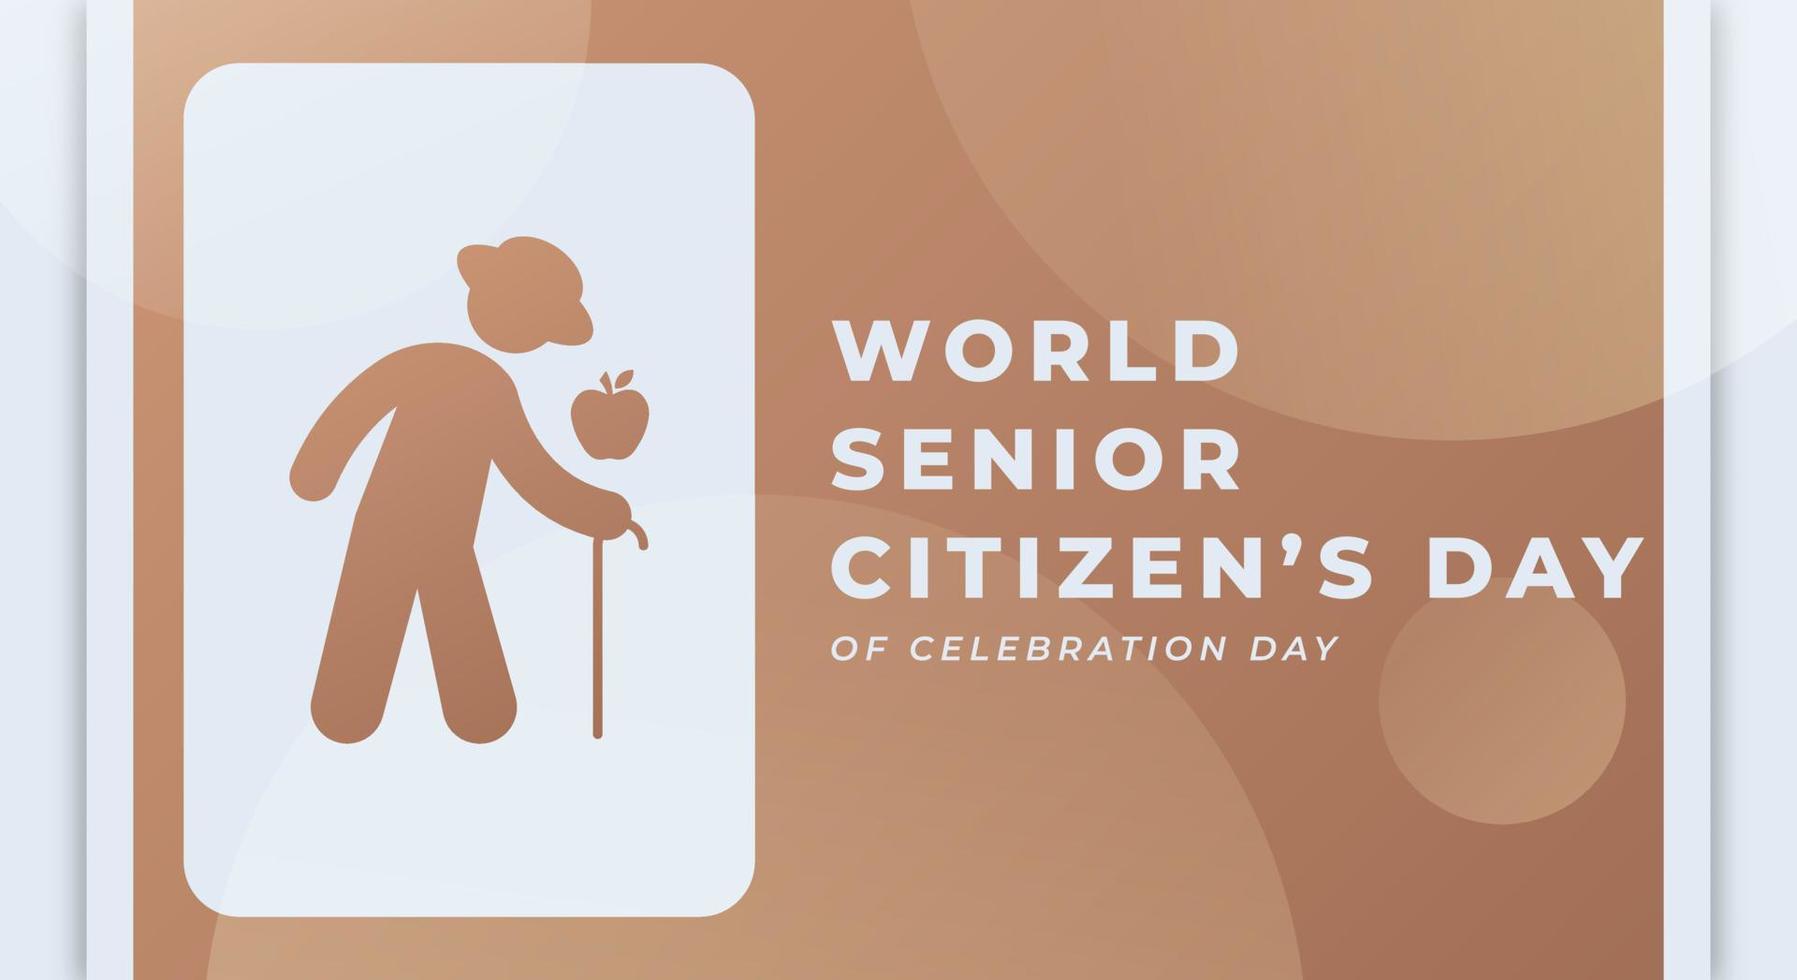 Happy The World Senior Citizen's Day Celebration Vector Design Illustration for Background, Poster, Banner, Advertising, Greeting Card